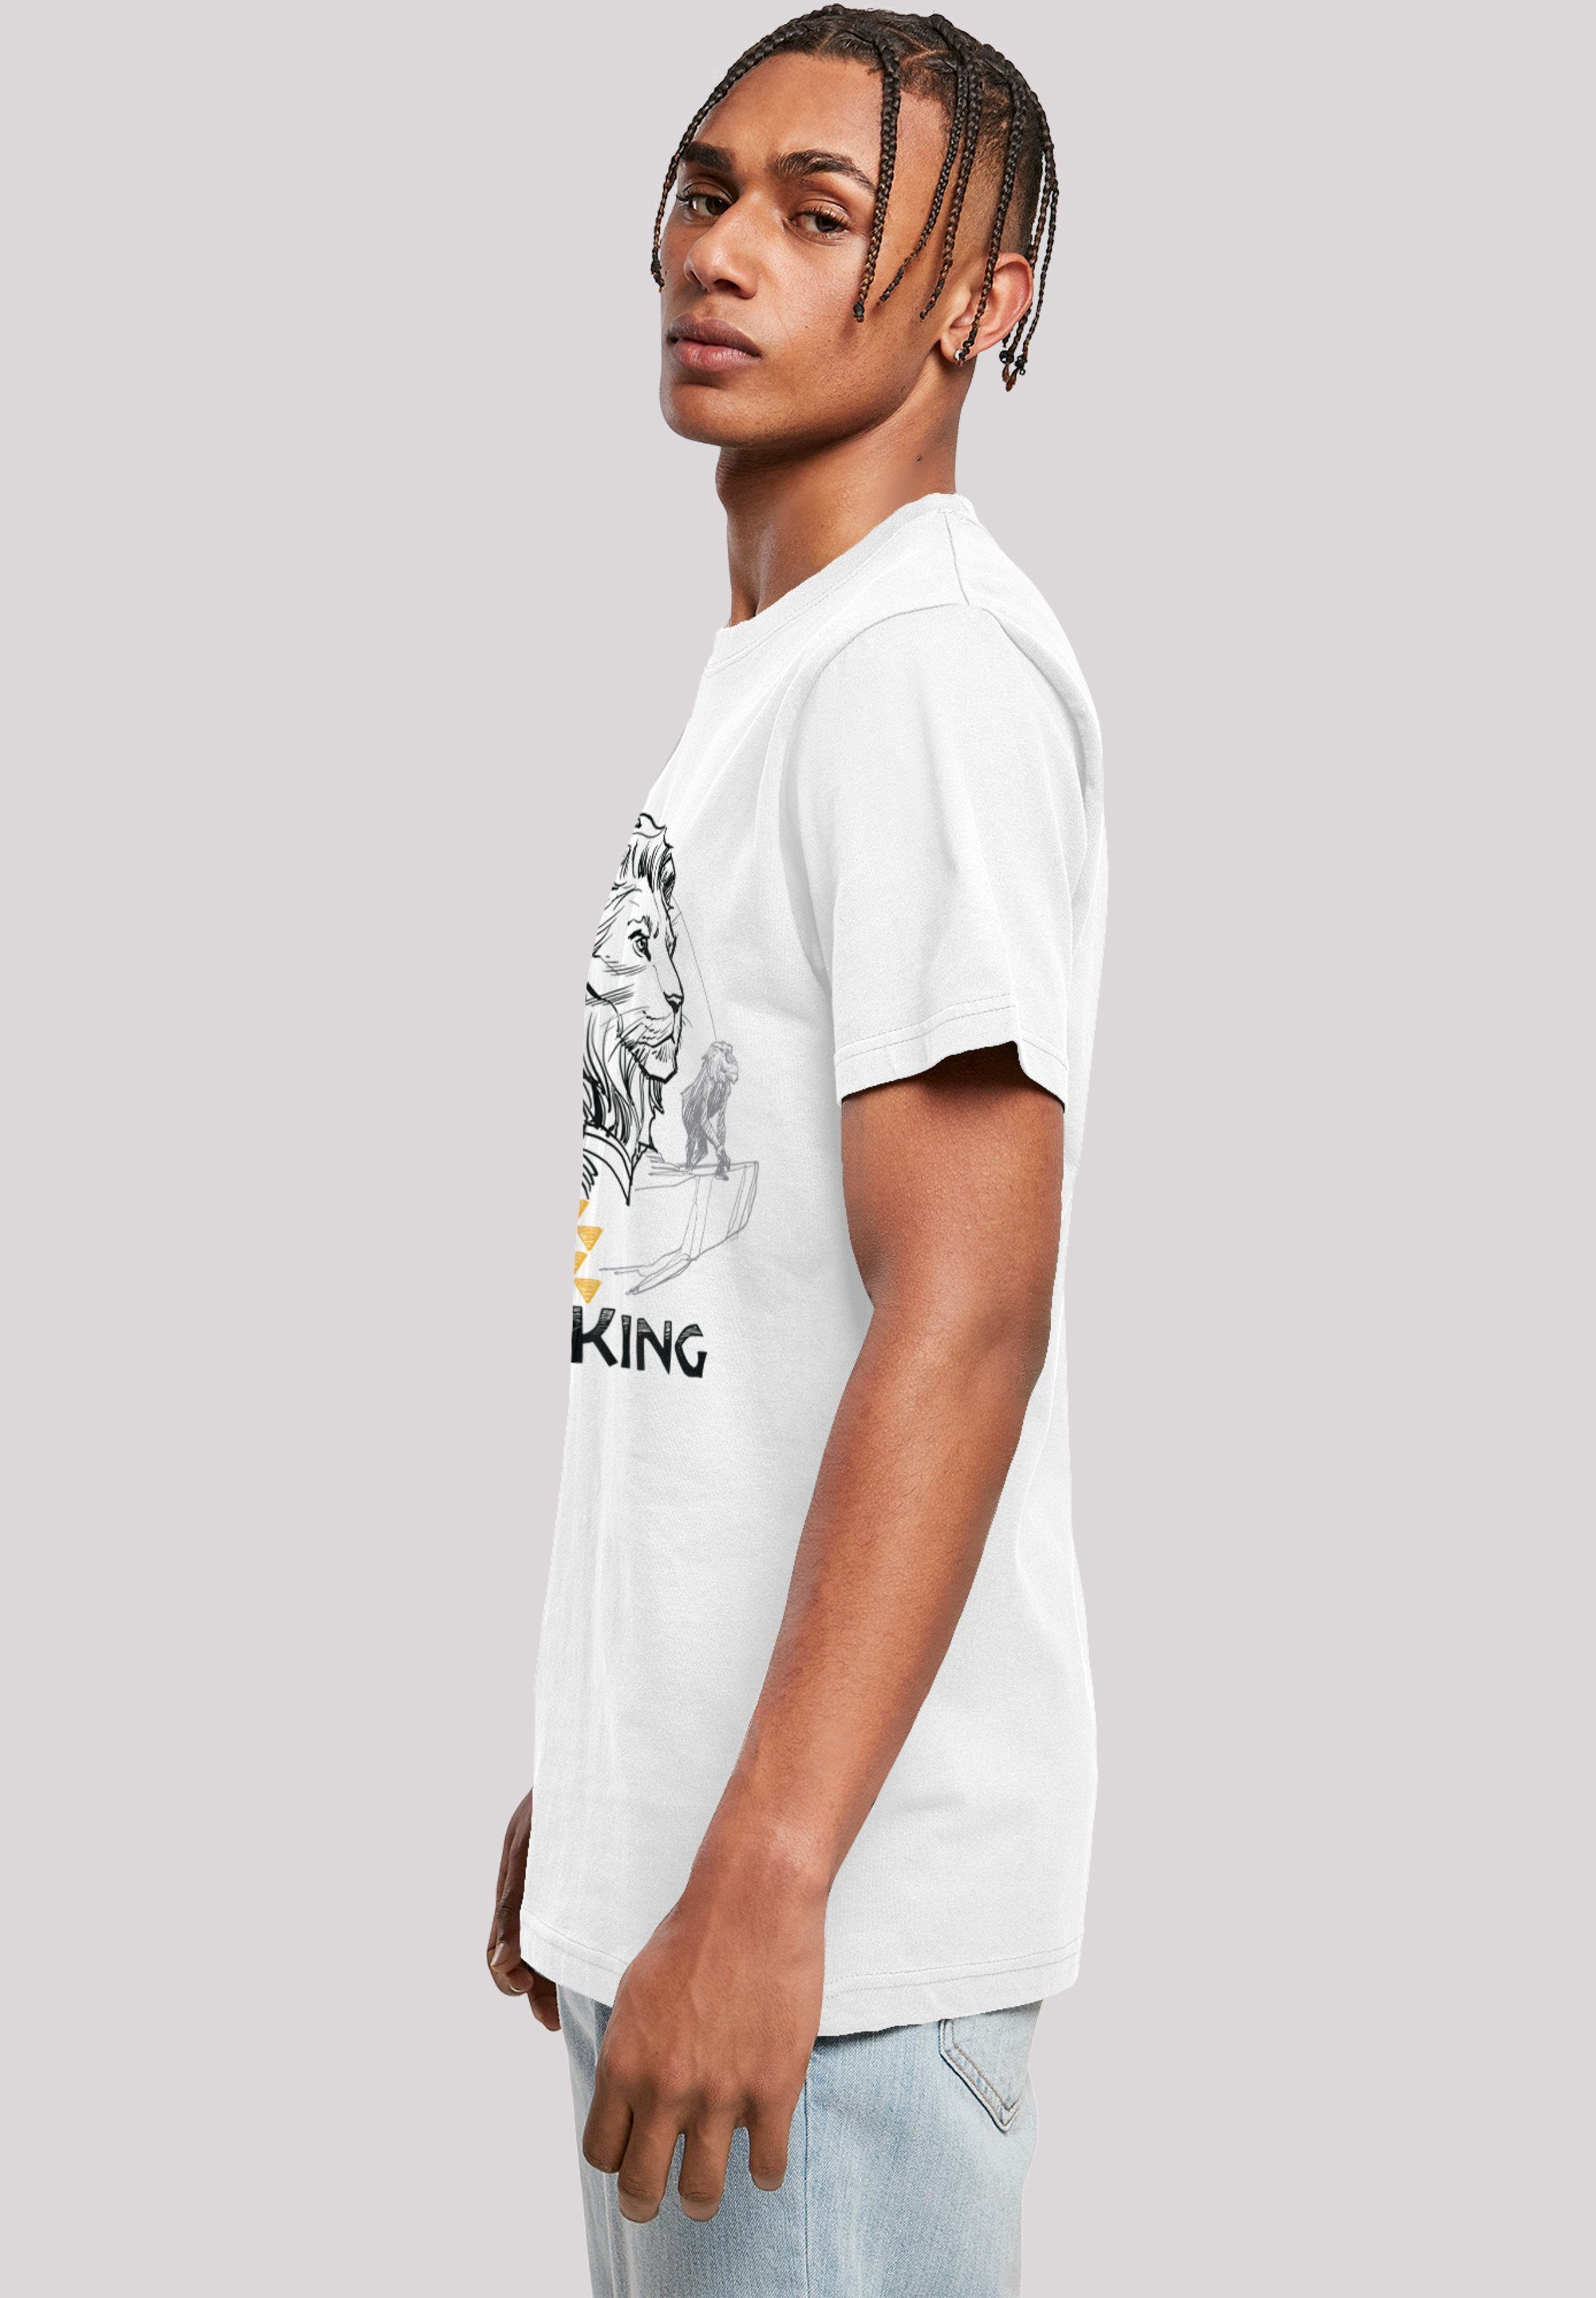 King Print Disney Löwen der It's König T-Shirt Good Be To F4NT4STIC Movie weiß